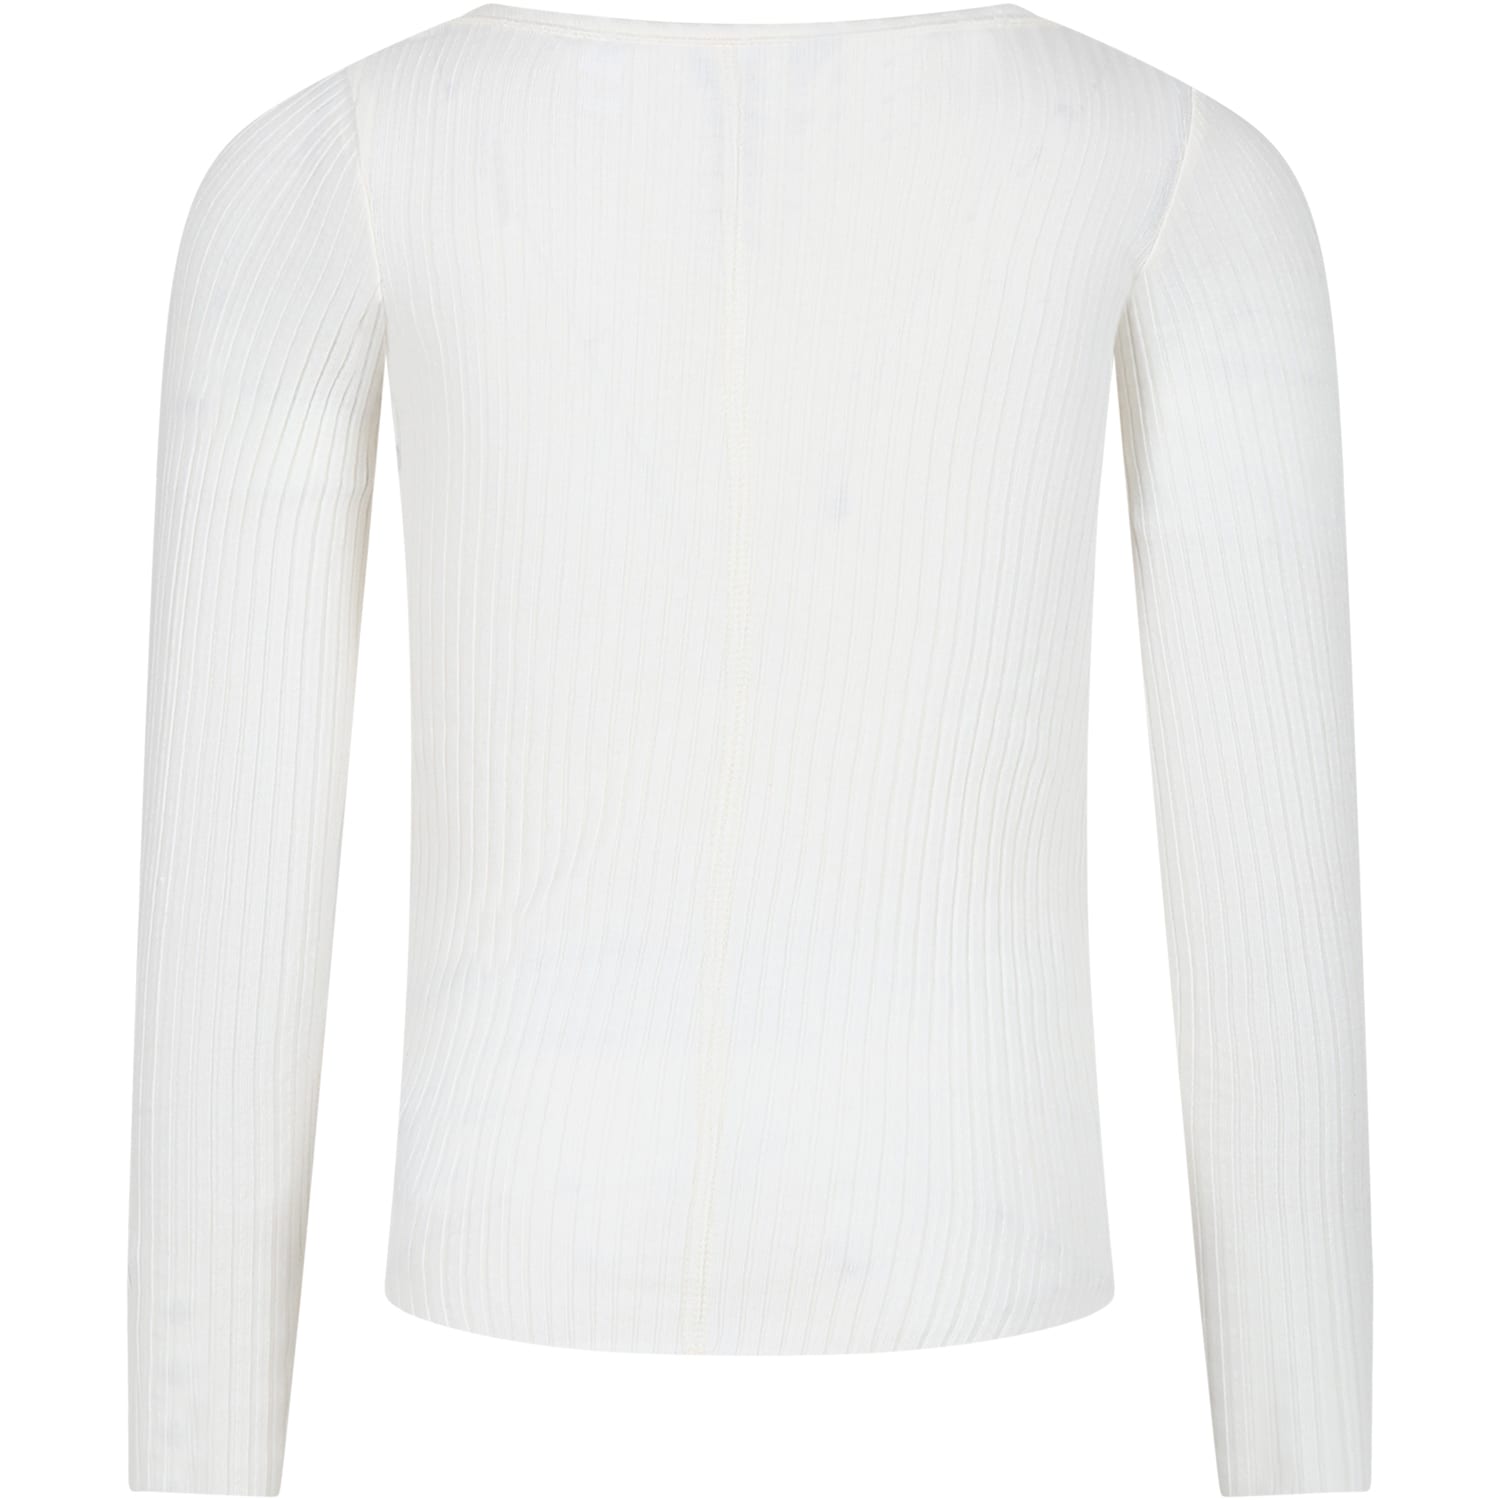 Shop Molo White T-shirt For Girl